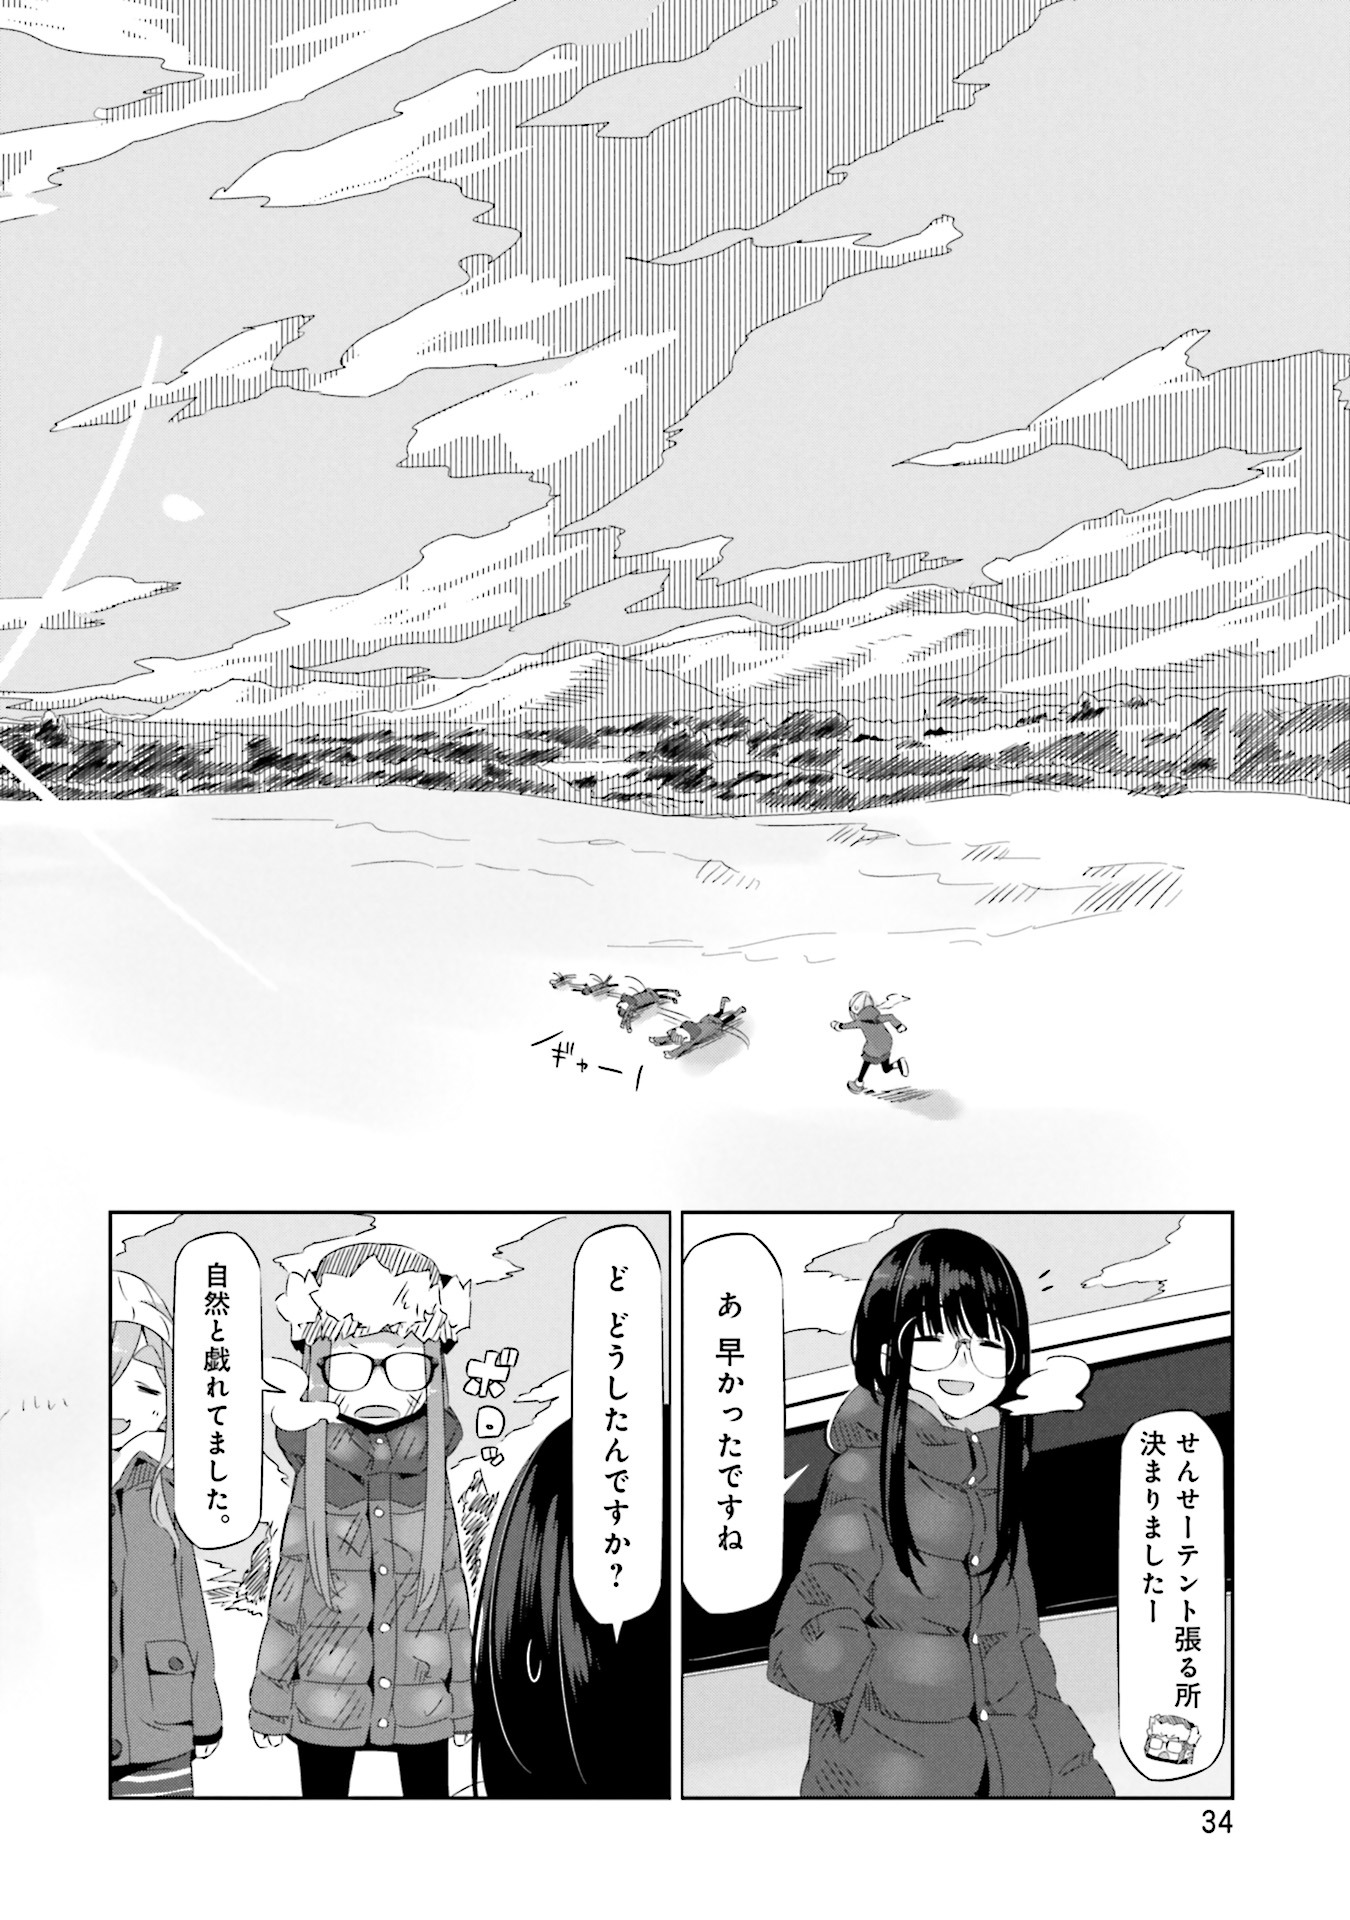 Yuru Camp - Chapter 20 - Page 2